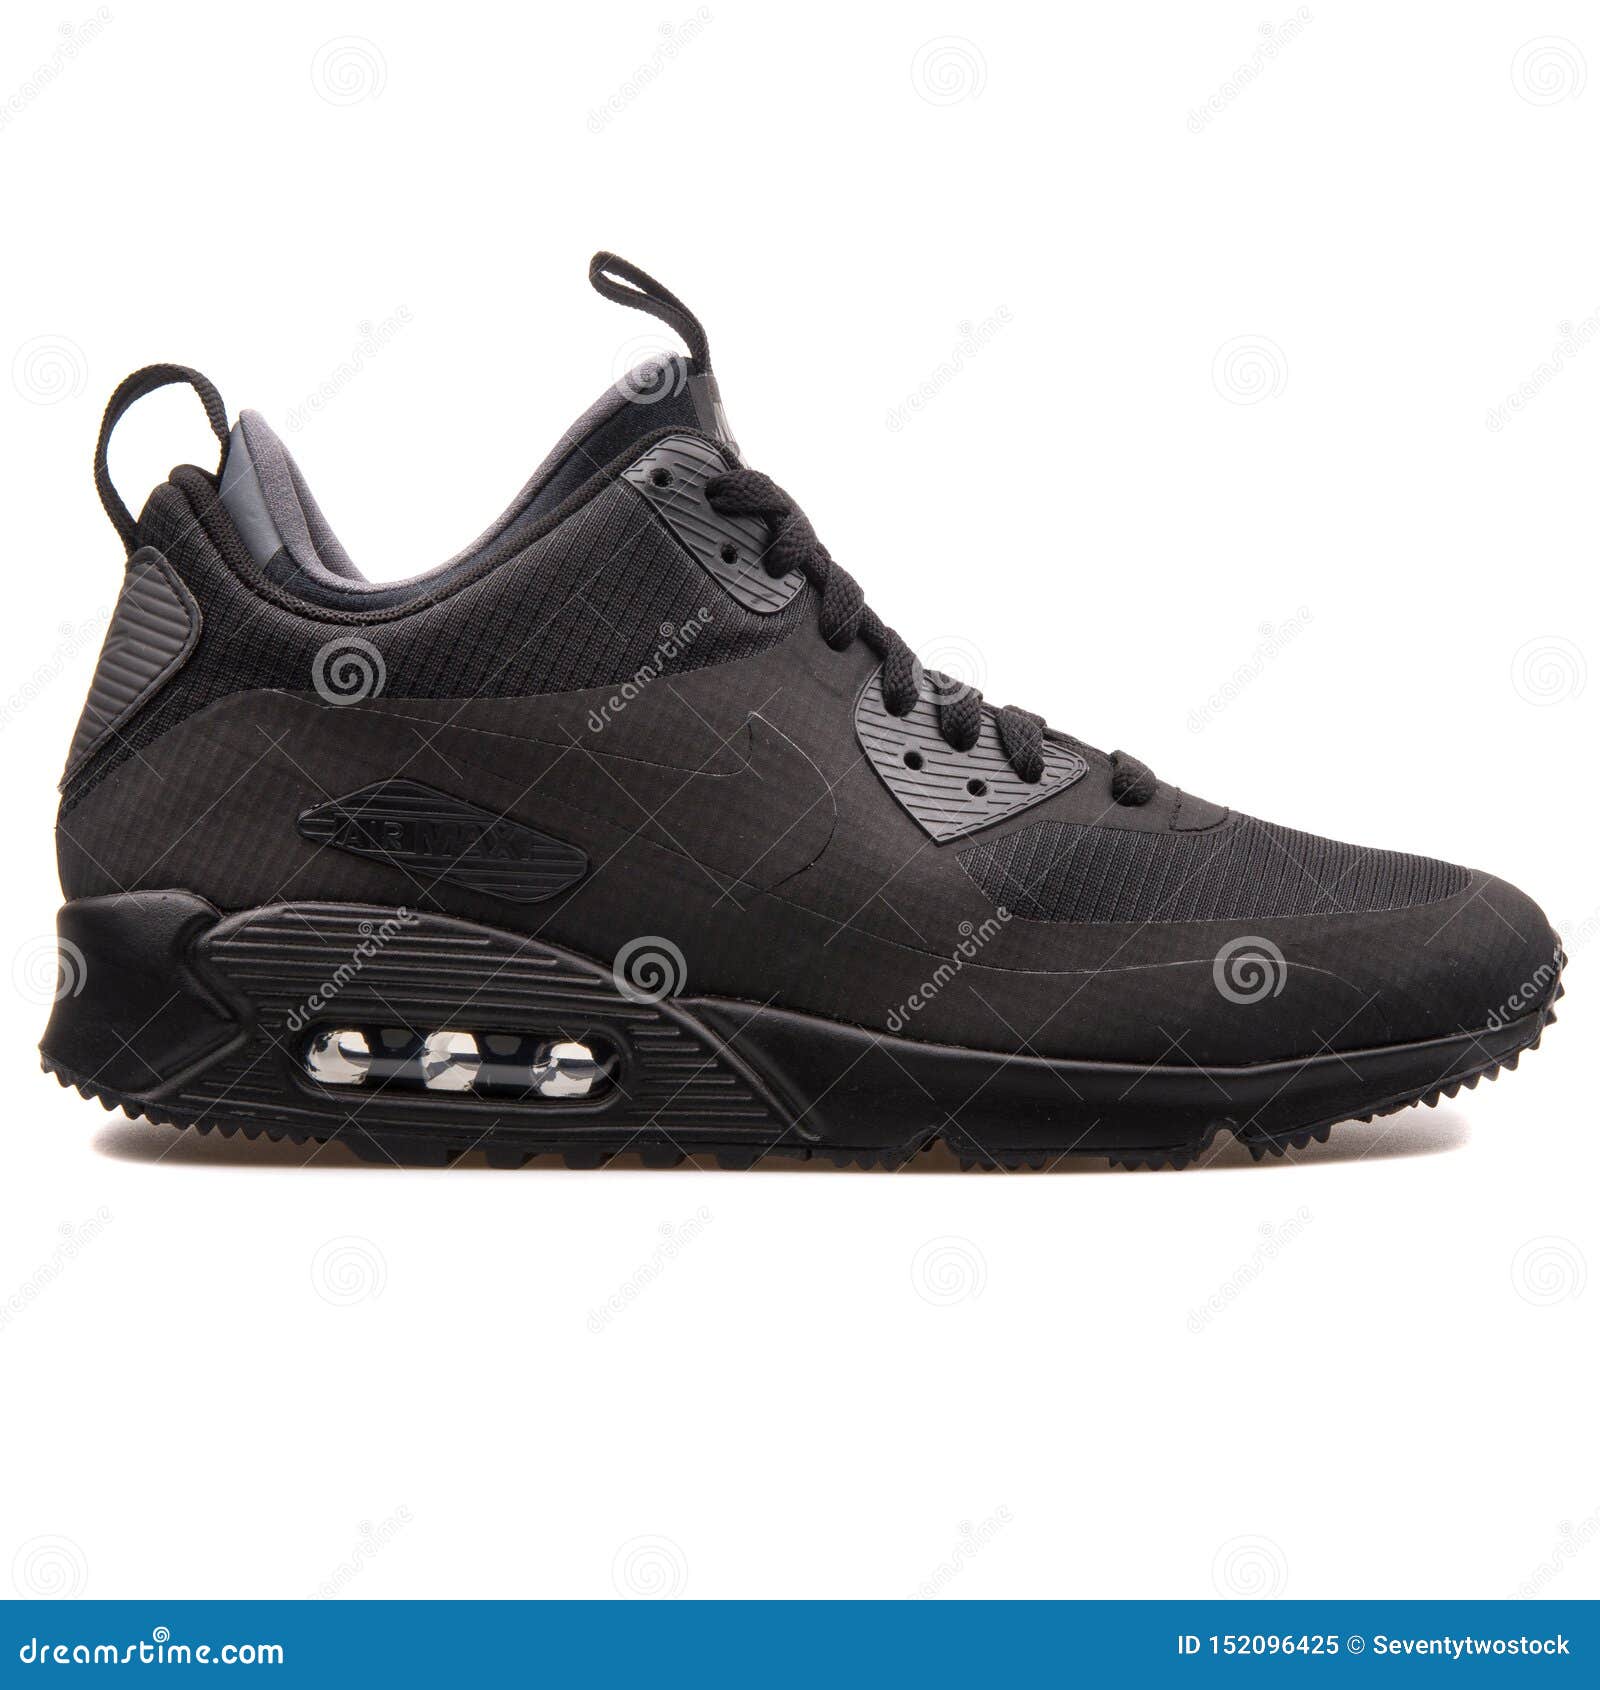 computadora nariz niebla tóxica Nike Air Max 90 Mid Winter Black Sneaker Editorial Image - Image of life,  sneakers: 152096425